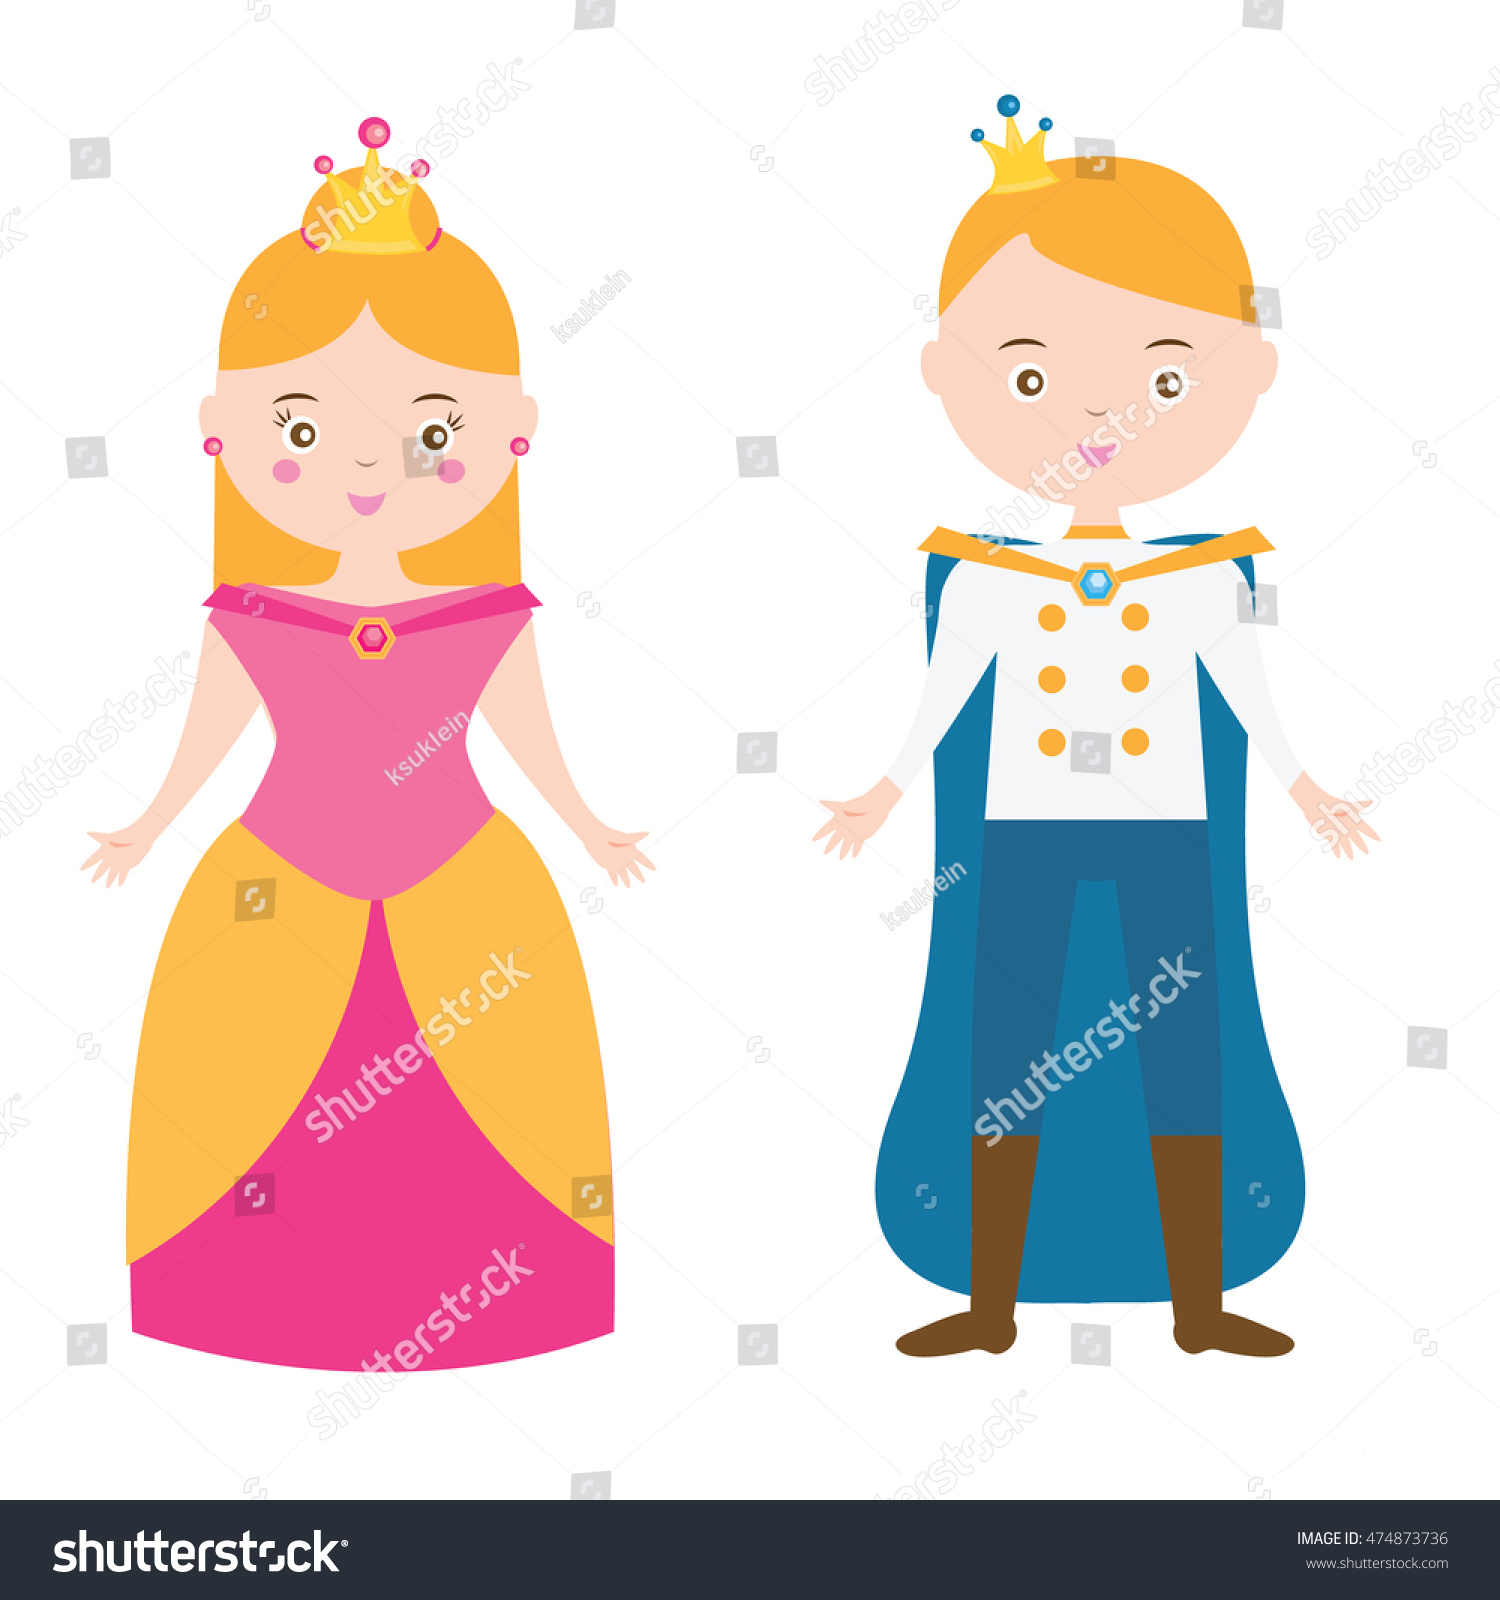 Cartoon Princess Prince Crowns Characters Cartoon Stock Vector ...